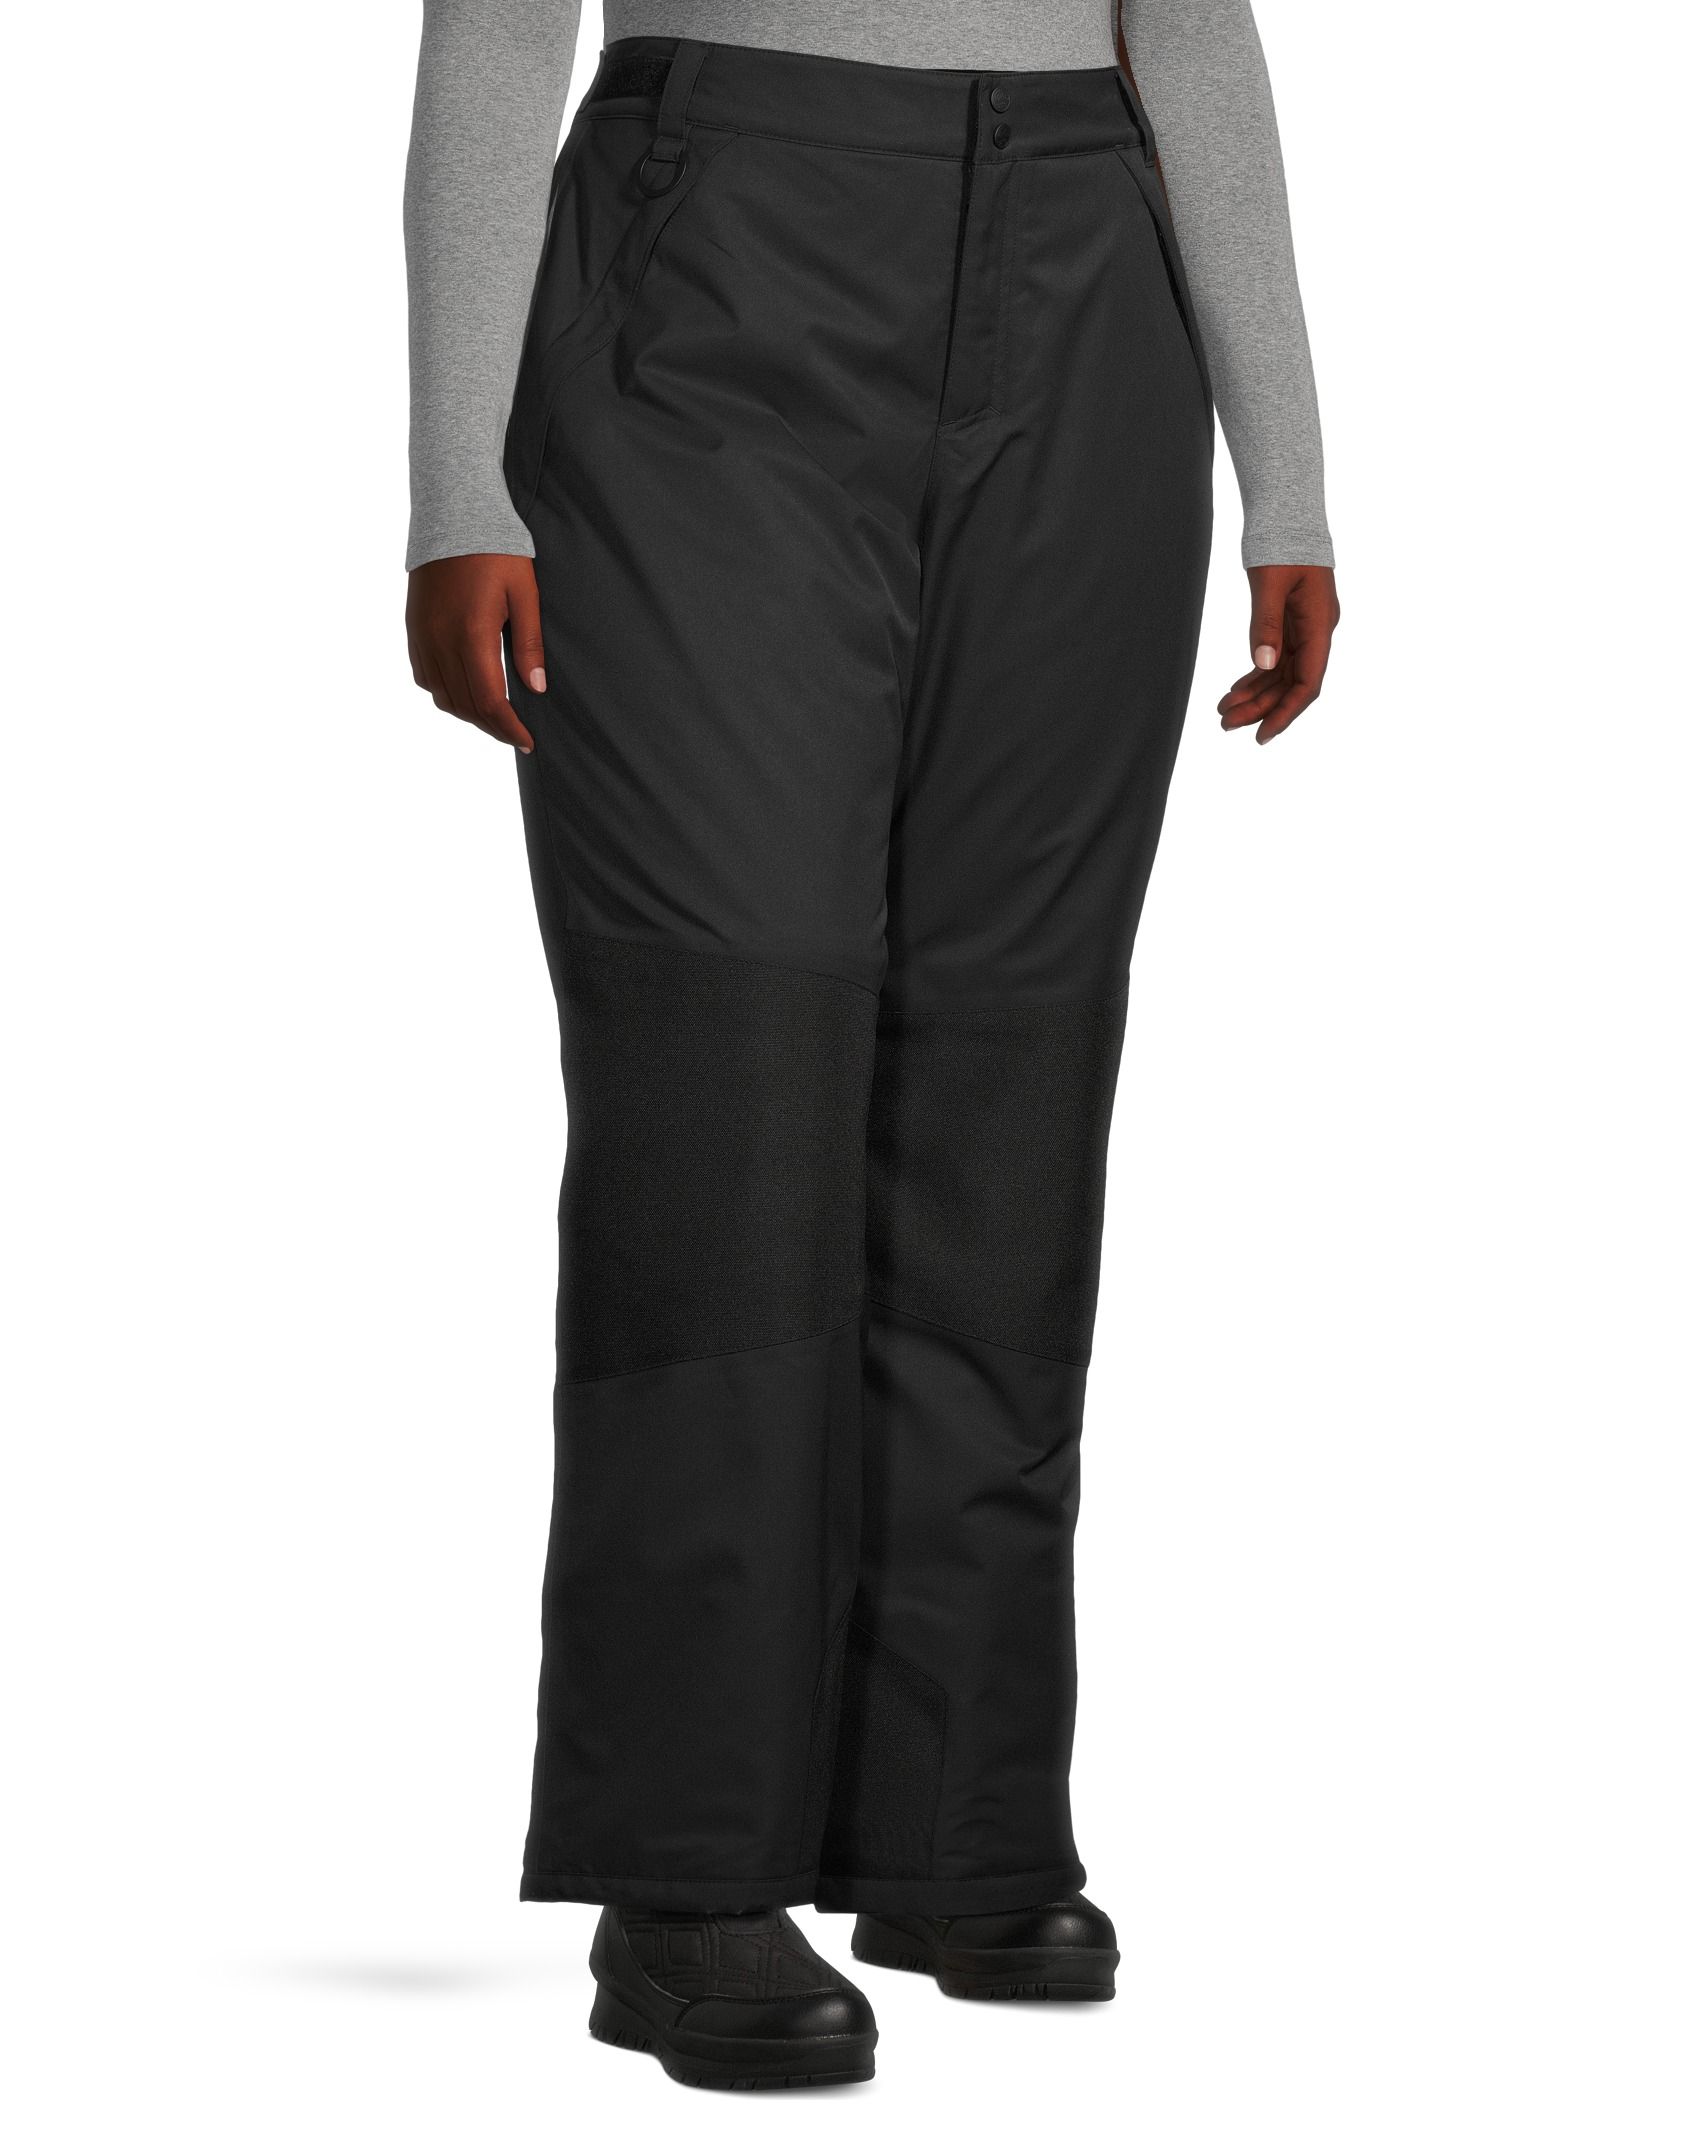 WindRiver Women's Myabi Supersoft T-Max Pants